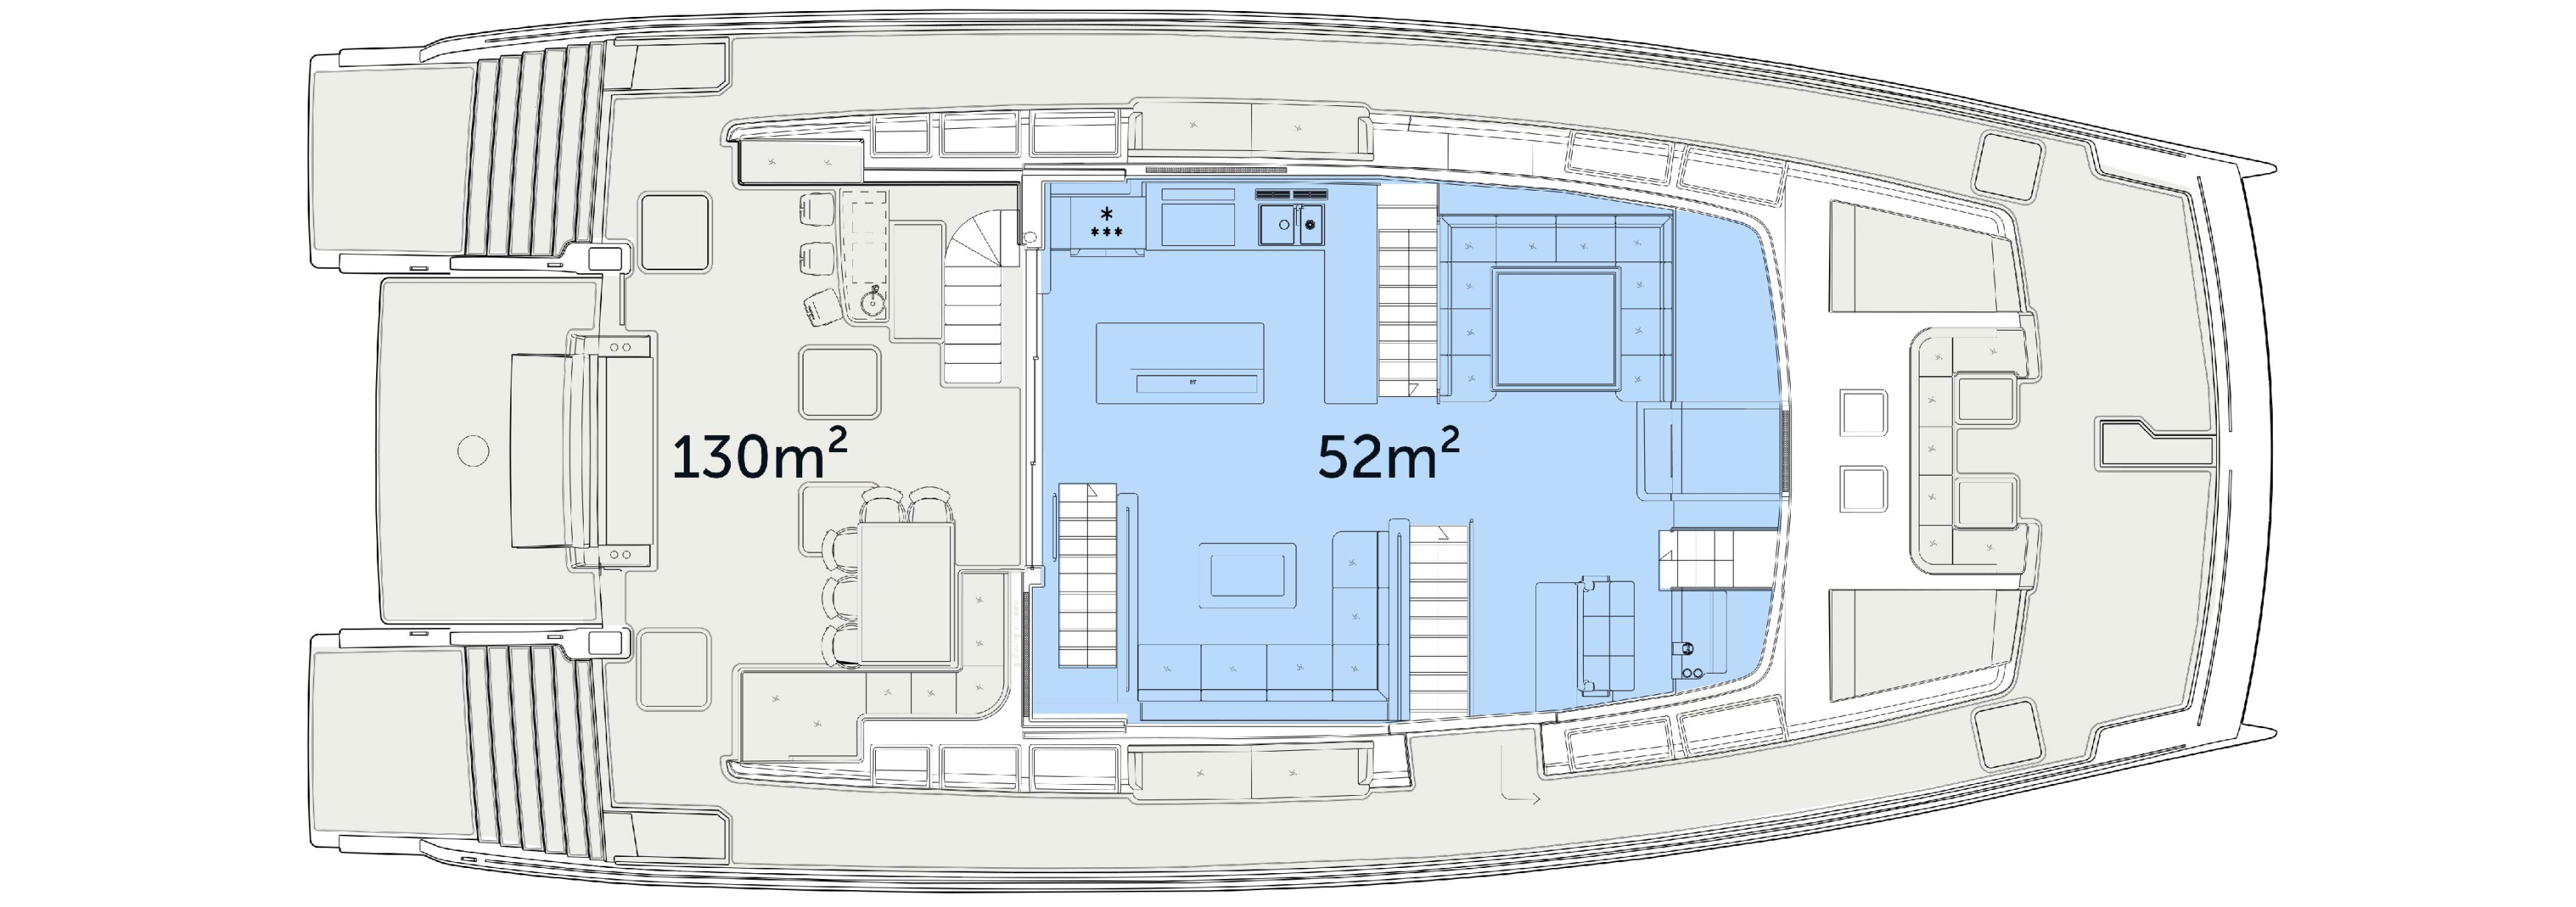 Silent 80 catamaran main area plan